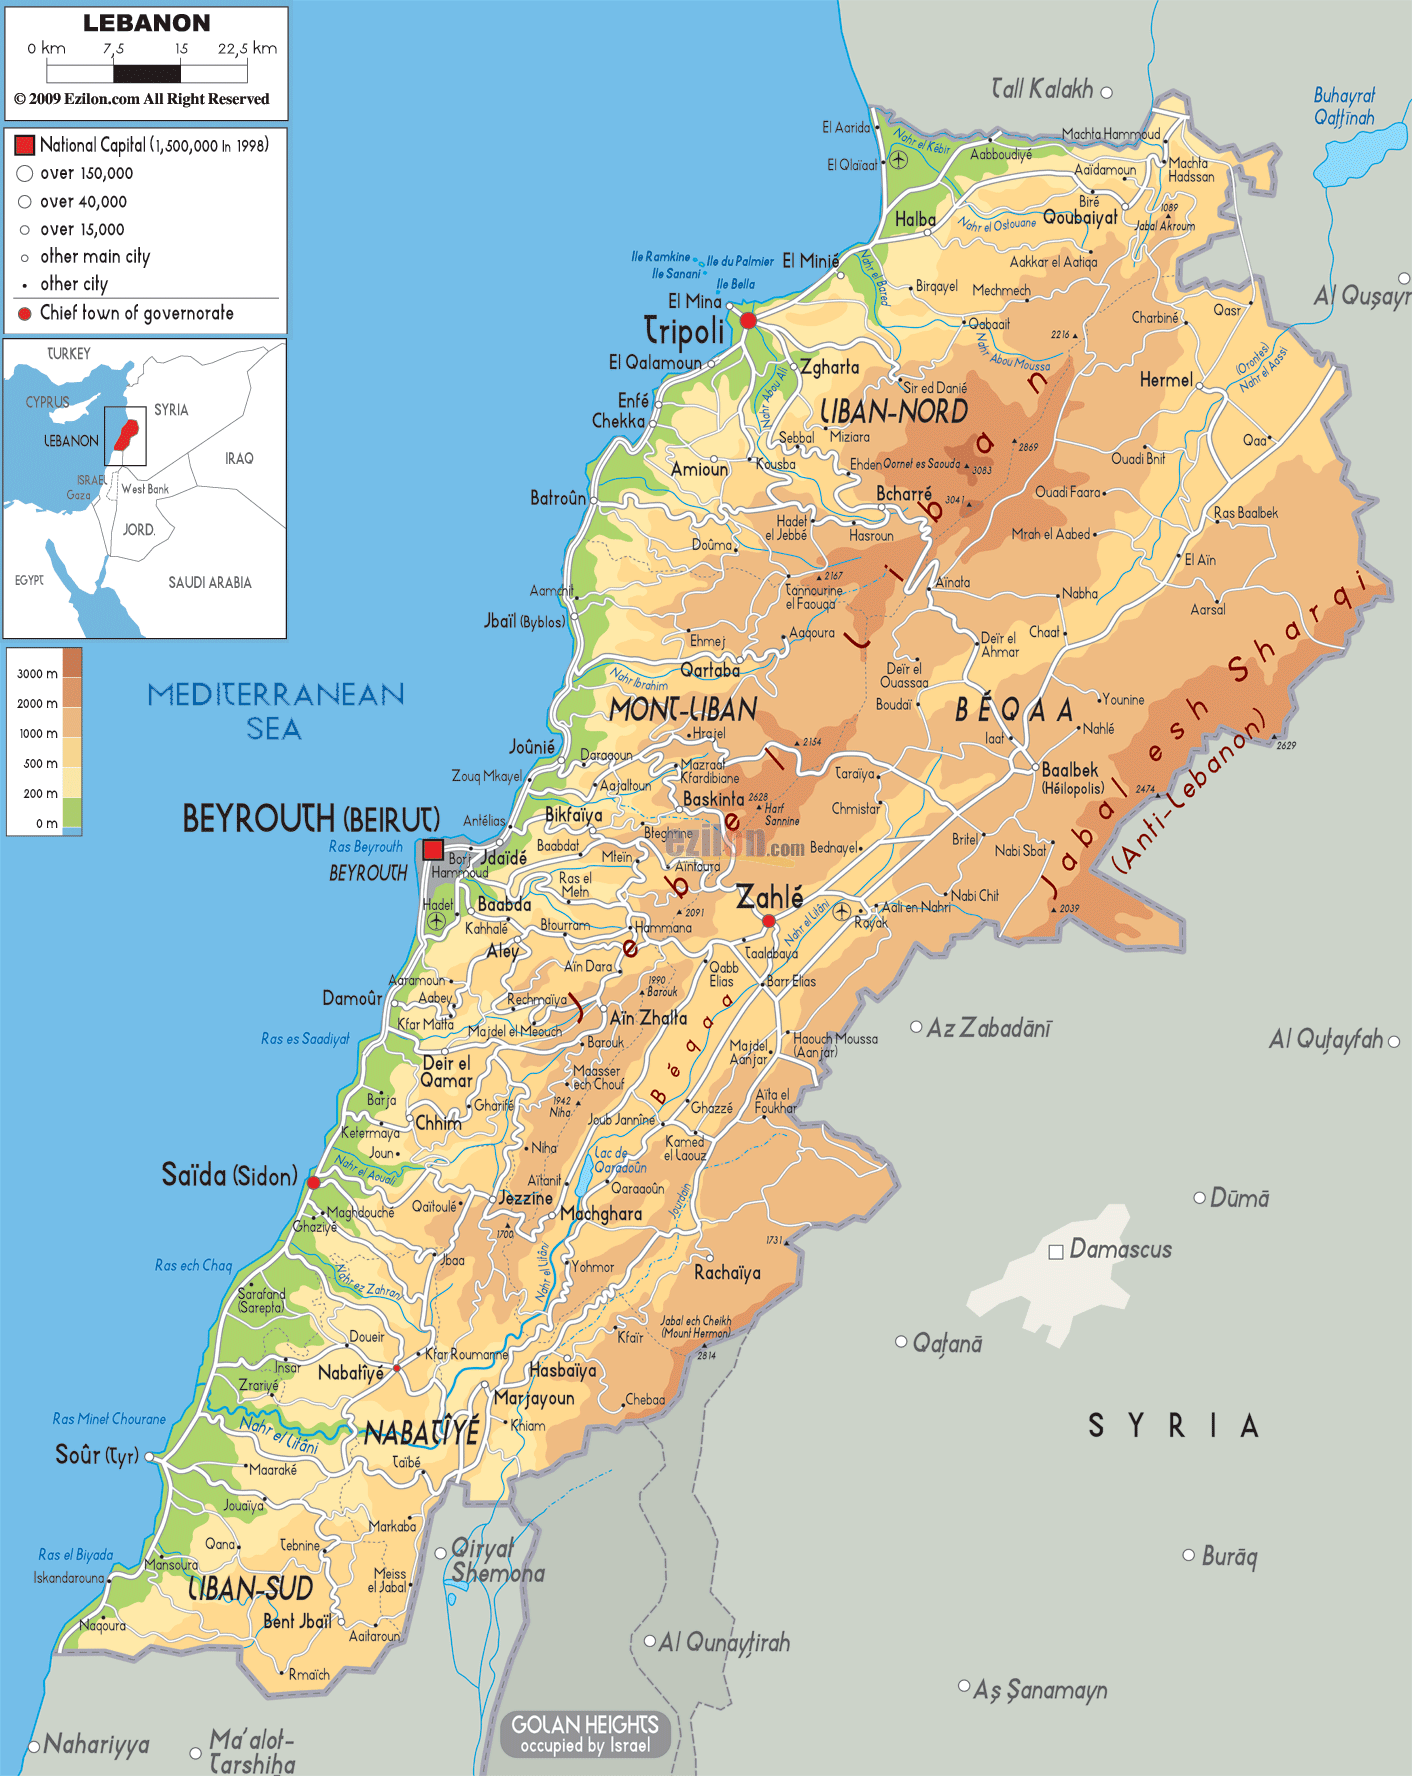 http://www.ezilon.com/maps/images/asia/Lebanon-physical-map.gif